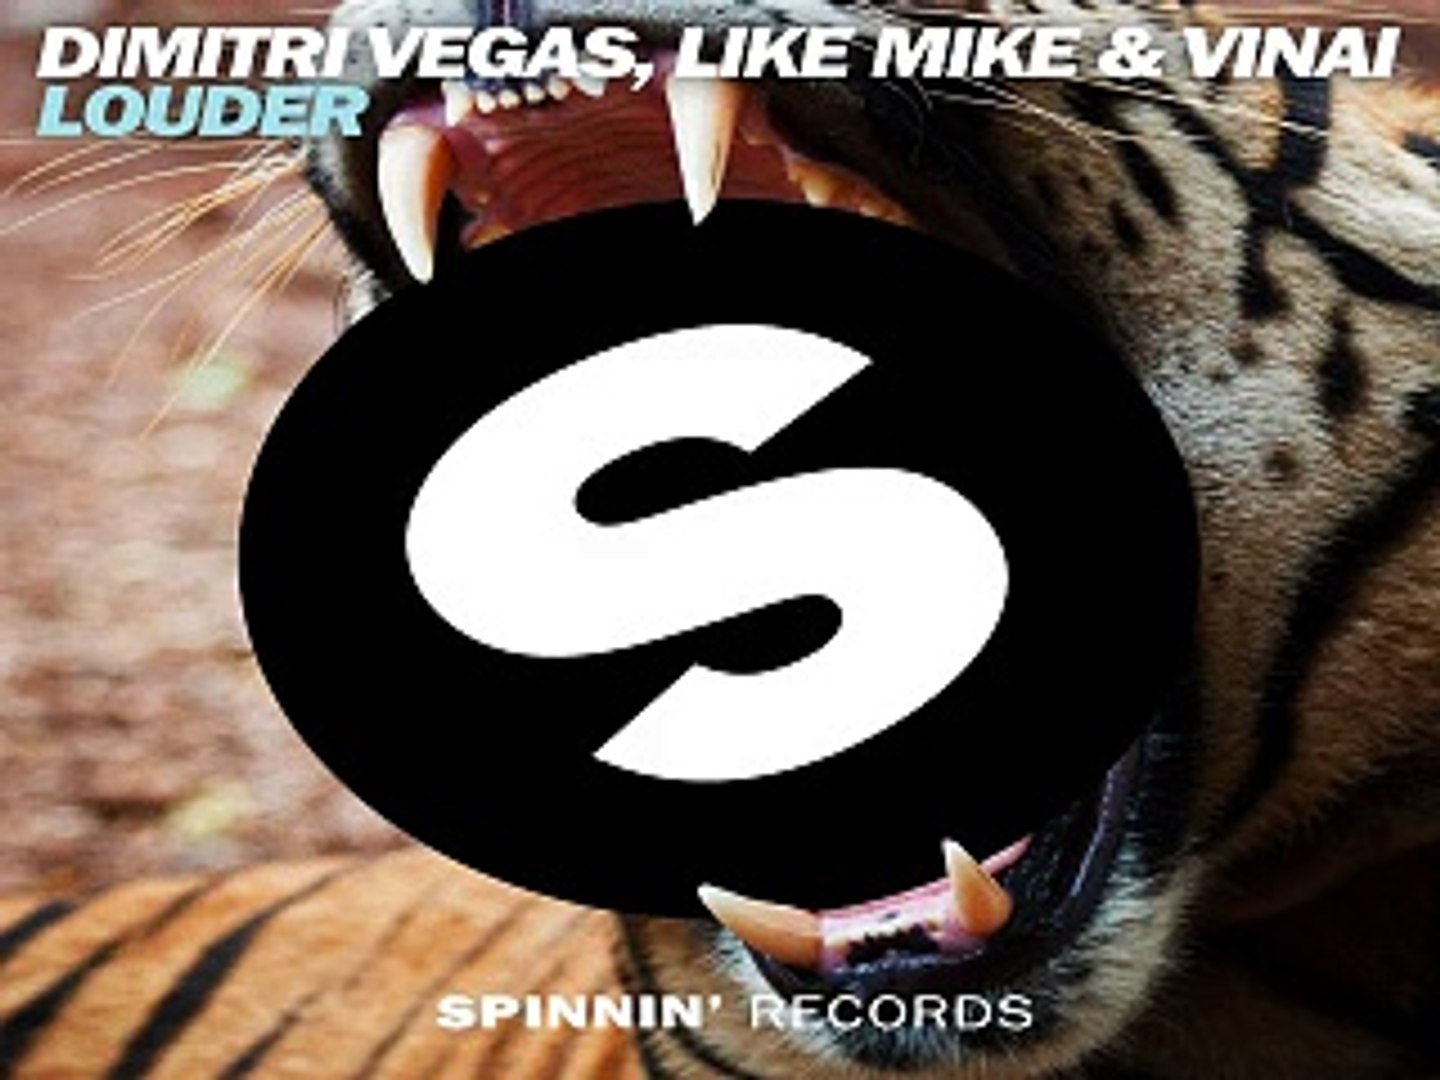 DOWNLOAD MP3 ] Dimitri Vegas, Like Mike & Vinai - Louder (Radio Edit) -  video Dailymotion